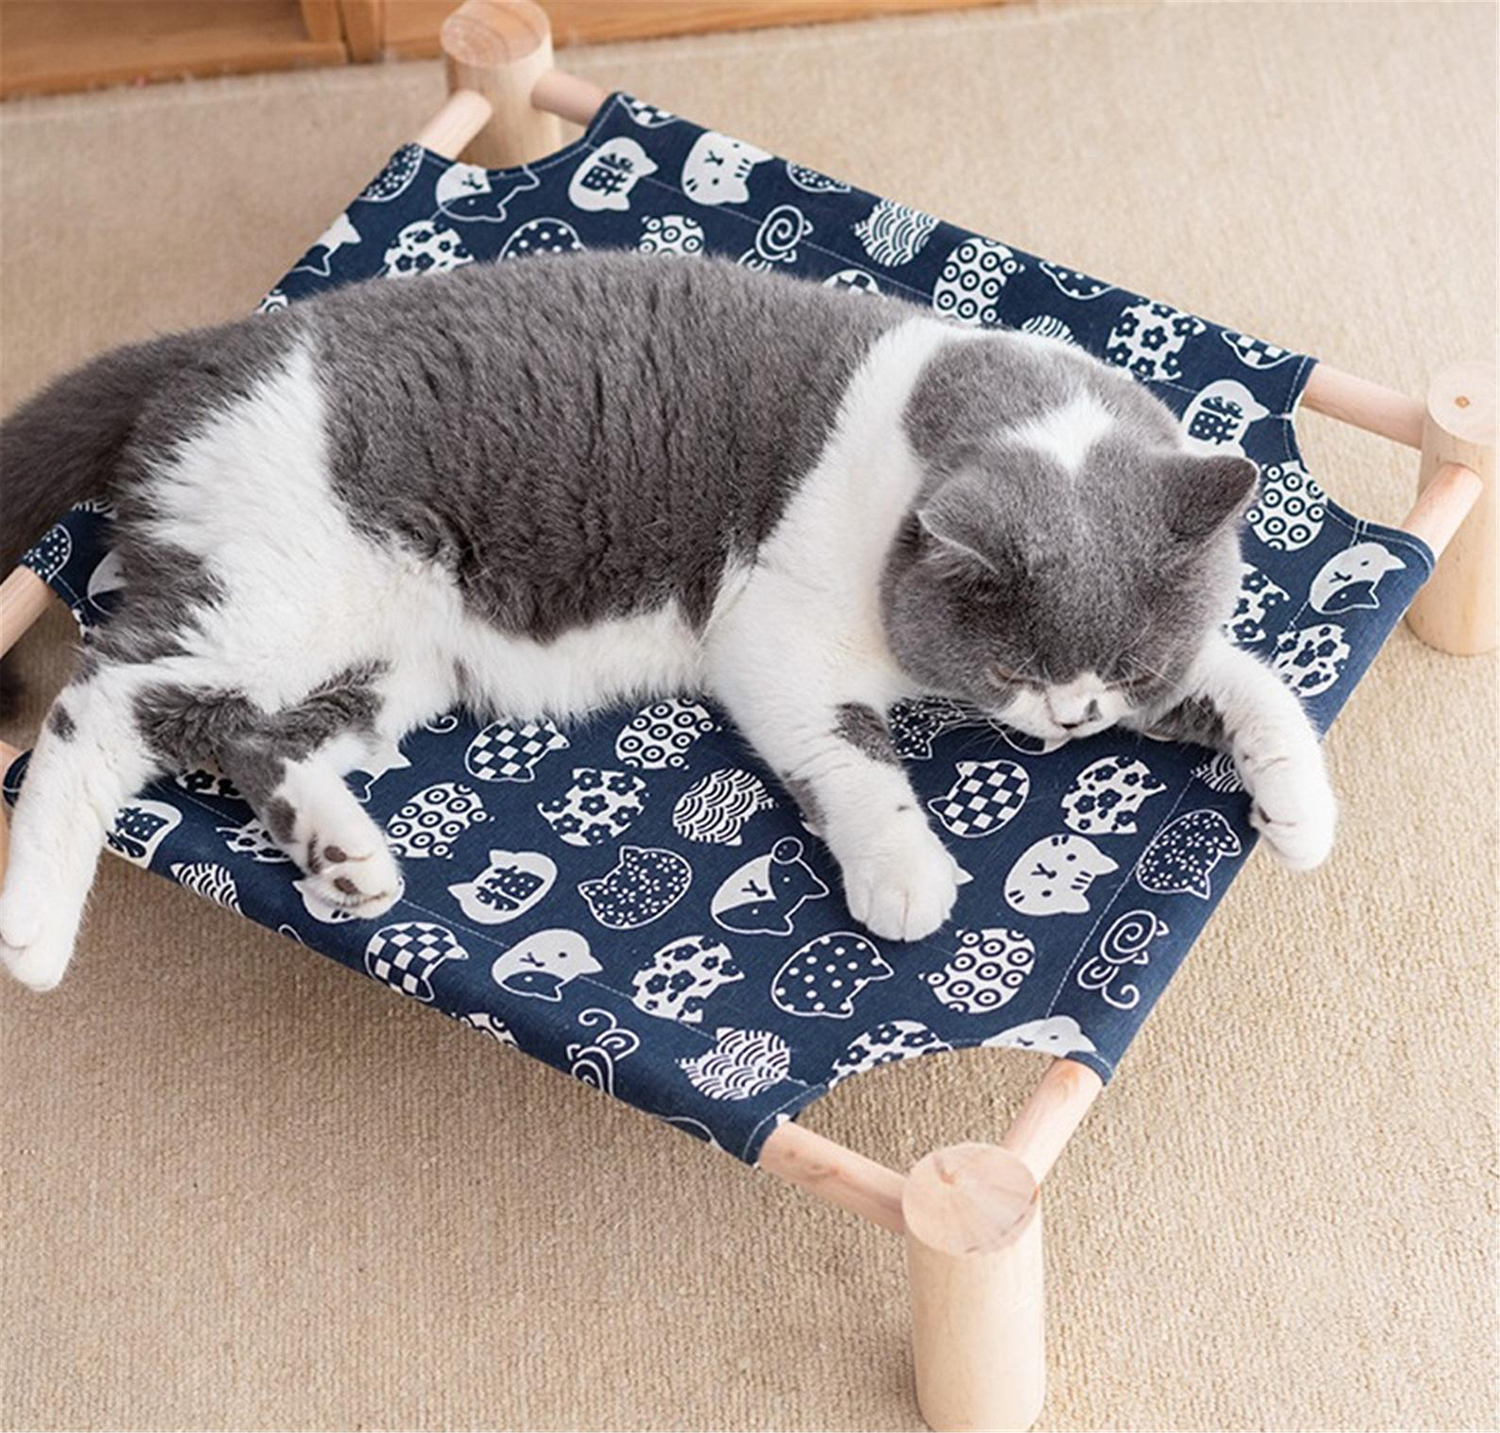 Cat Lounging on Raised Fabric Hammock